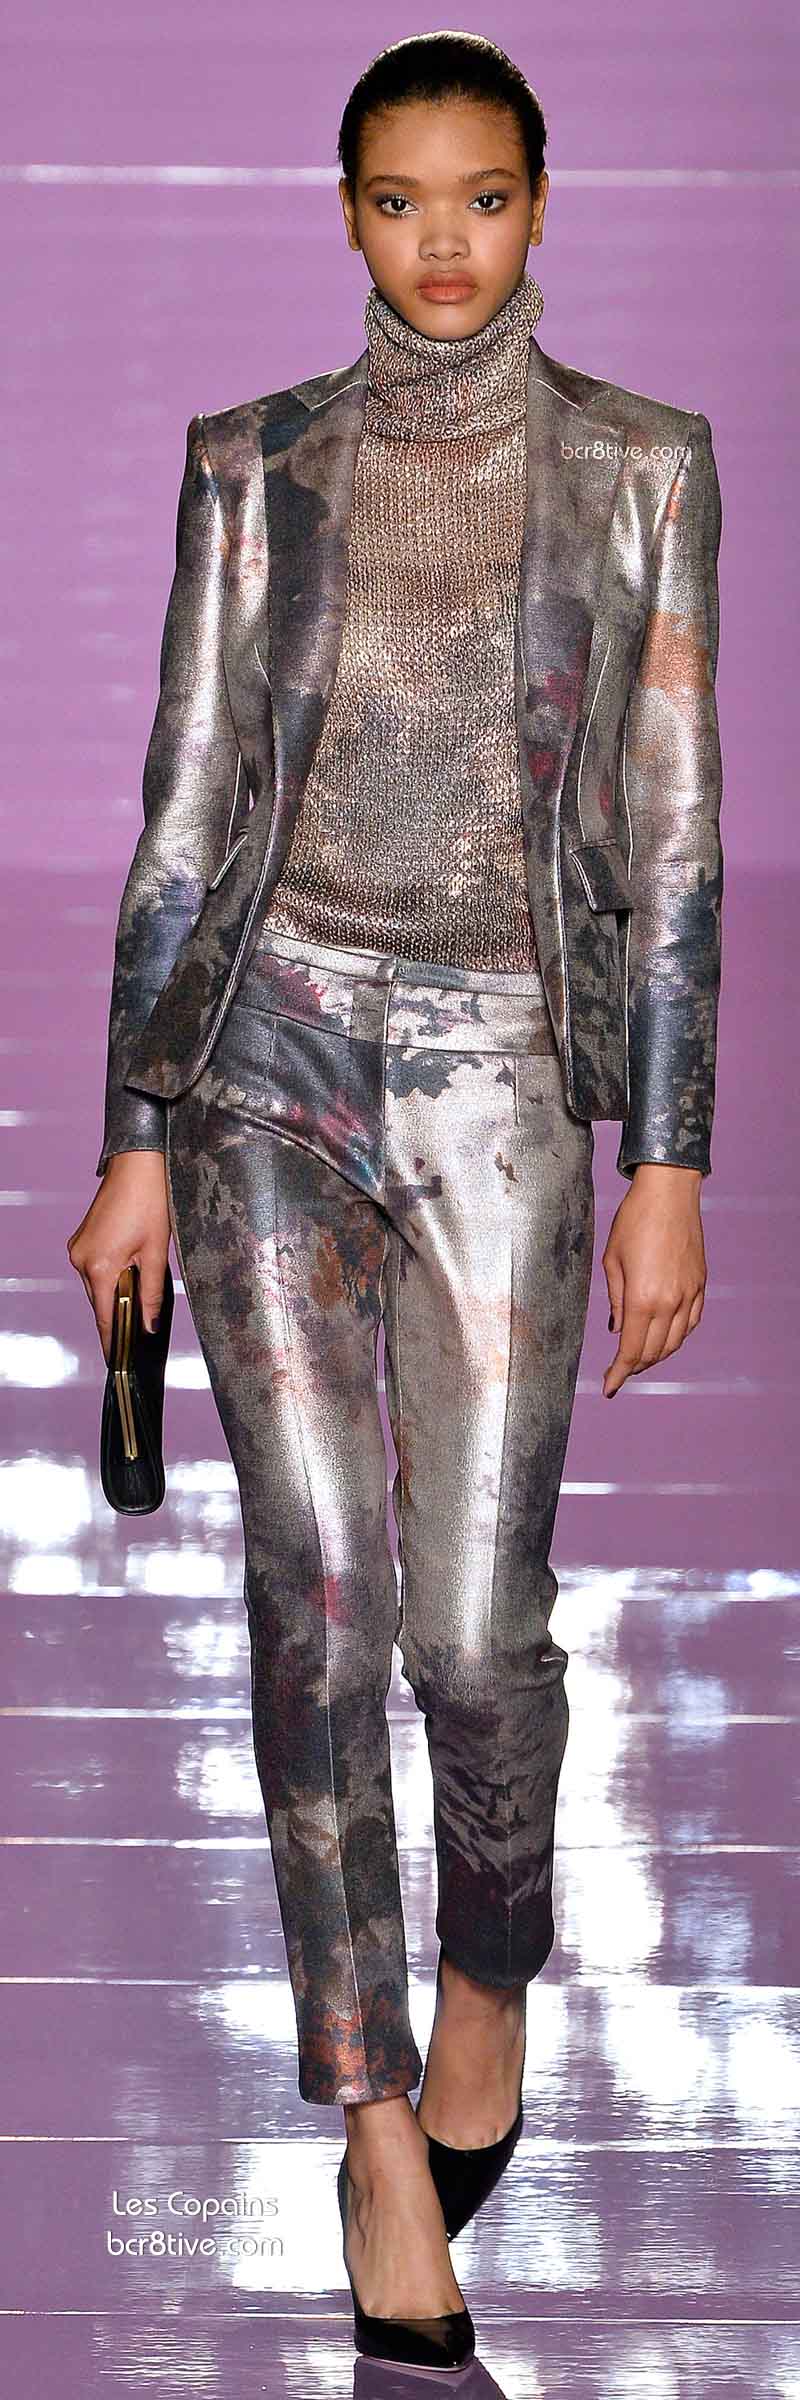 Fall 2014 Menswear Inspired Fashion - Les Copains